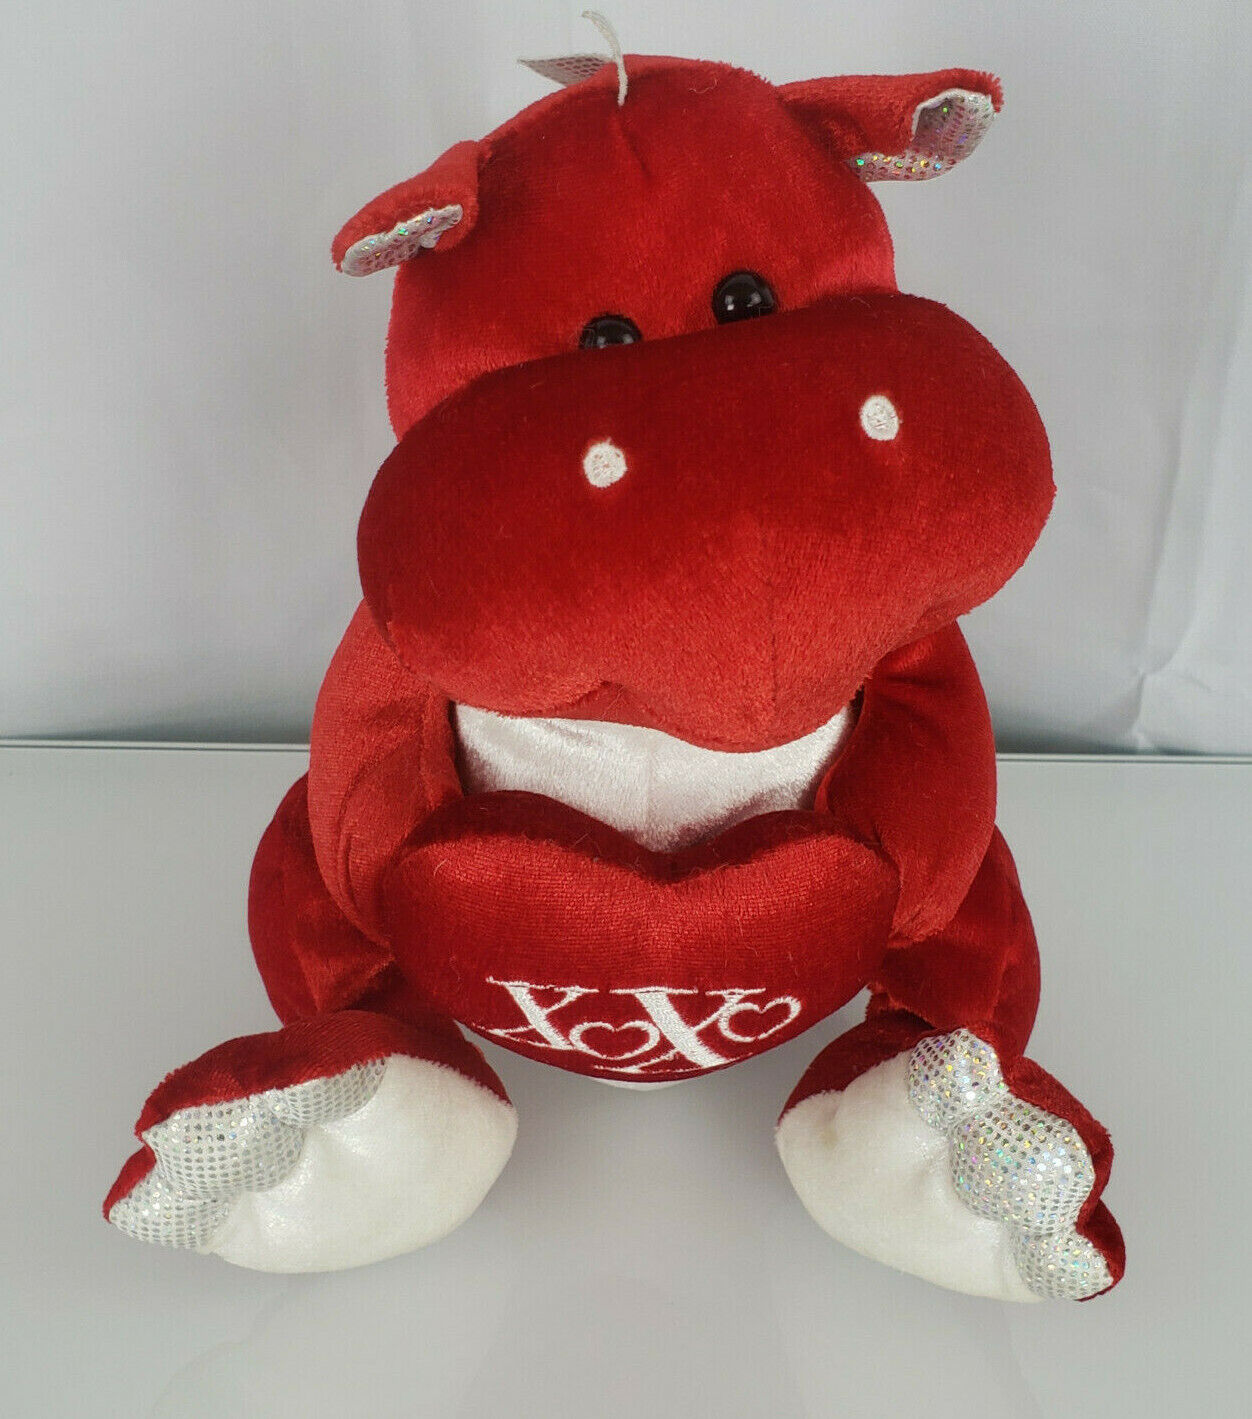 Walmart Wal Mart Stuffed Plush Red Dragon Valentines Day Heart XOXO 10